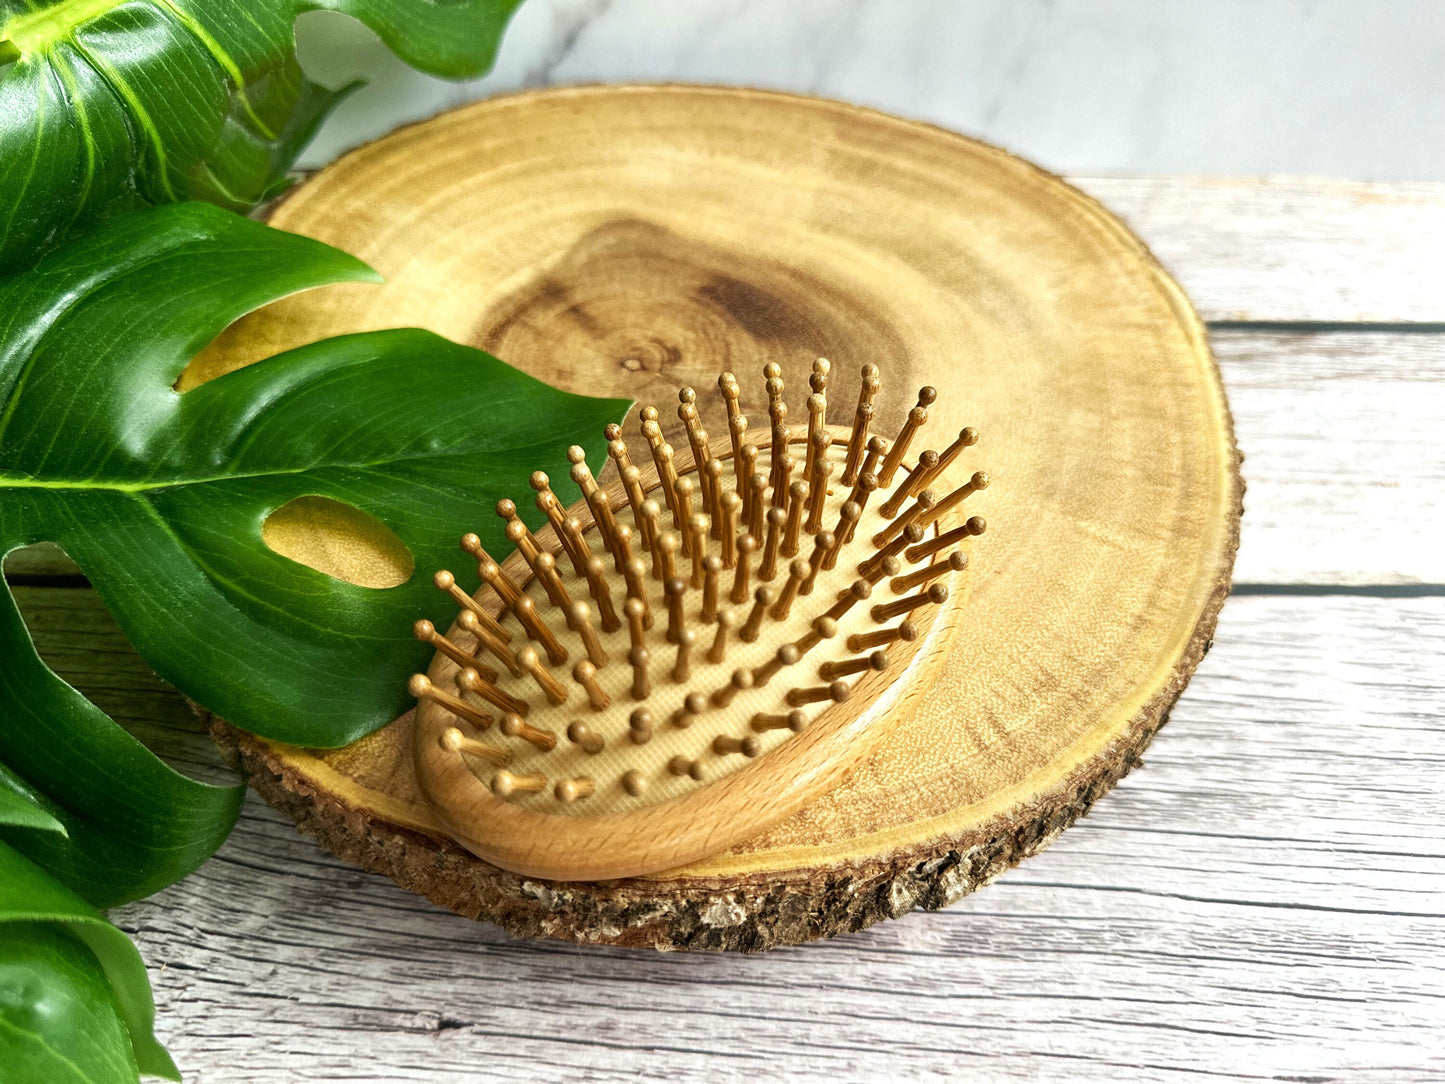 Personalized Wooden Travel Hairbrush Hand Sized Earth Friendly Sustainable Brush Gift for Women Hairbrush Zero Waste Organic Wood Hairbrush